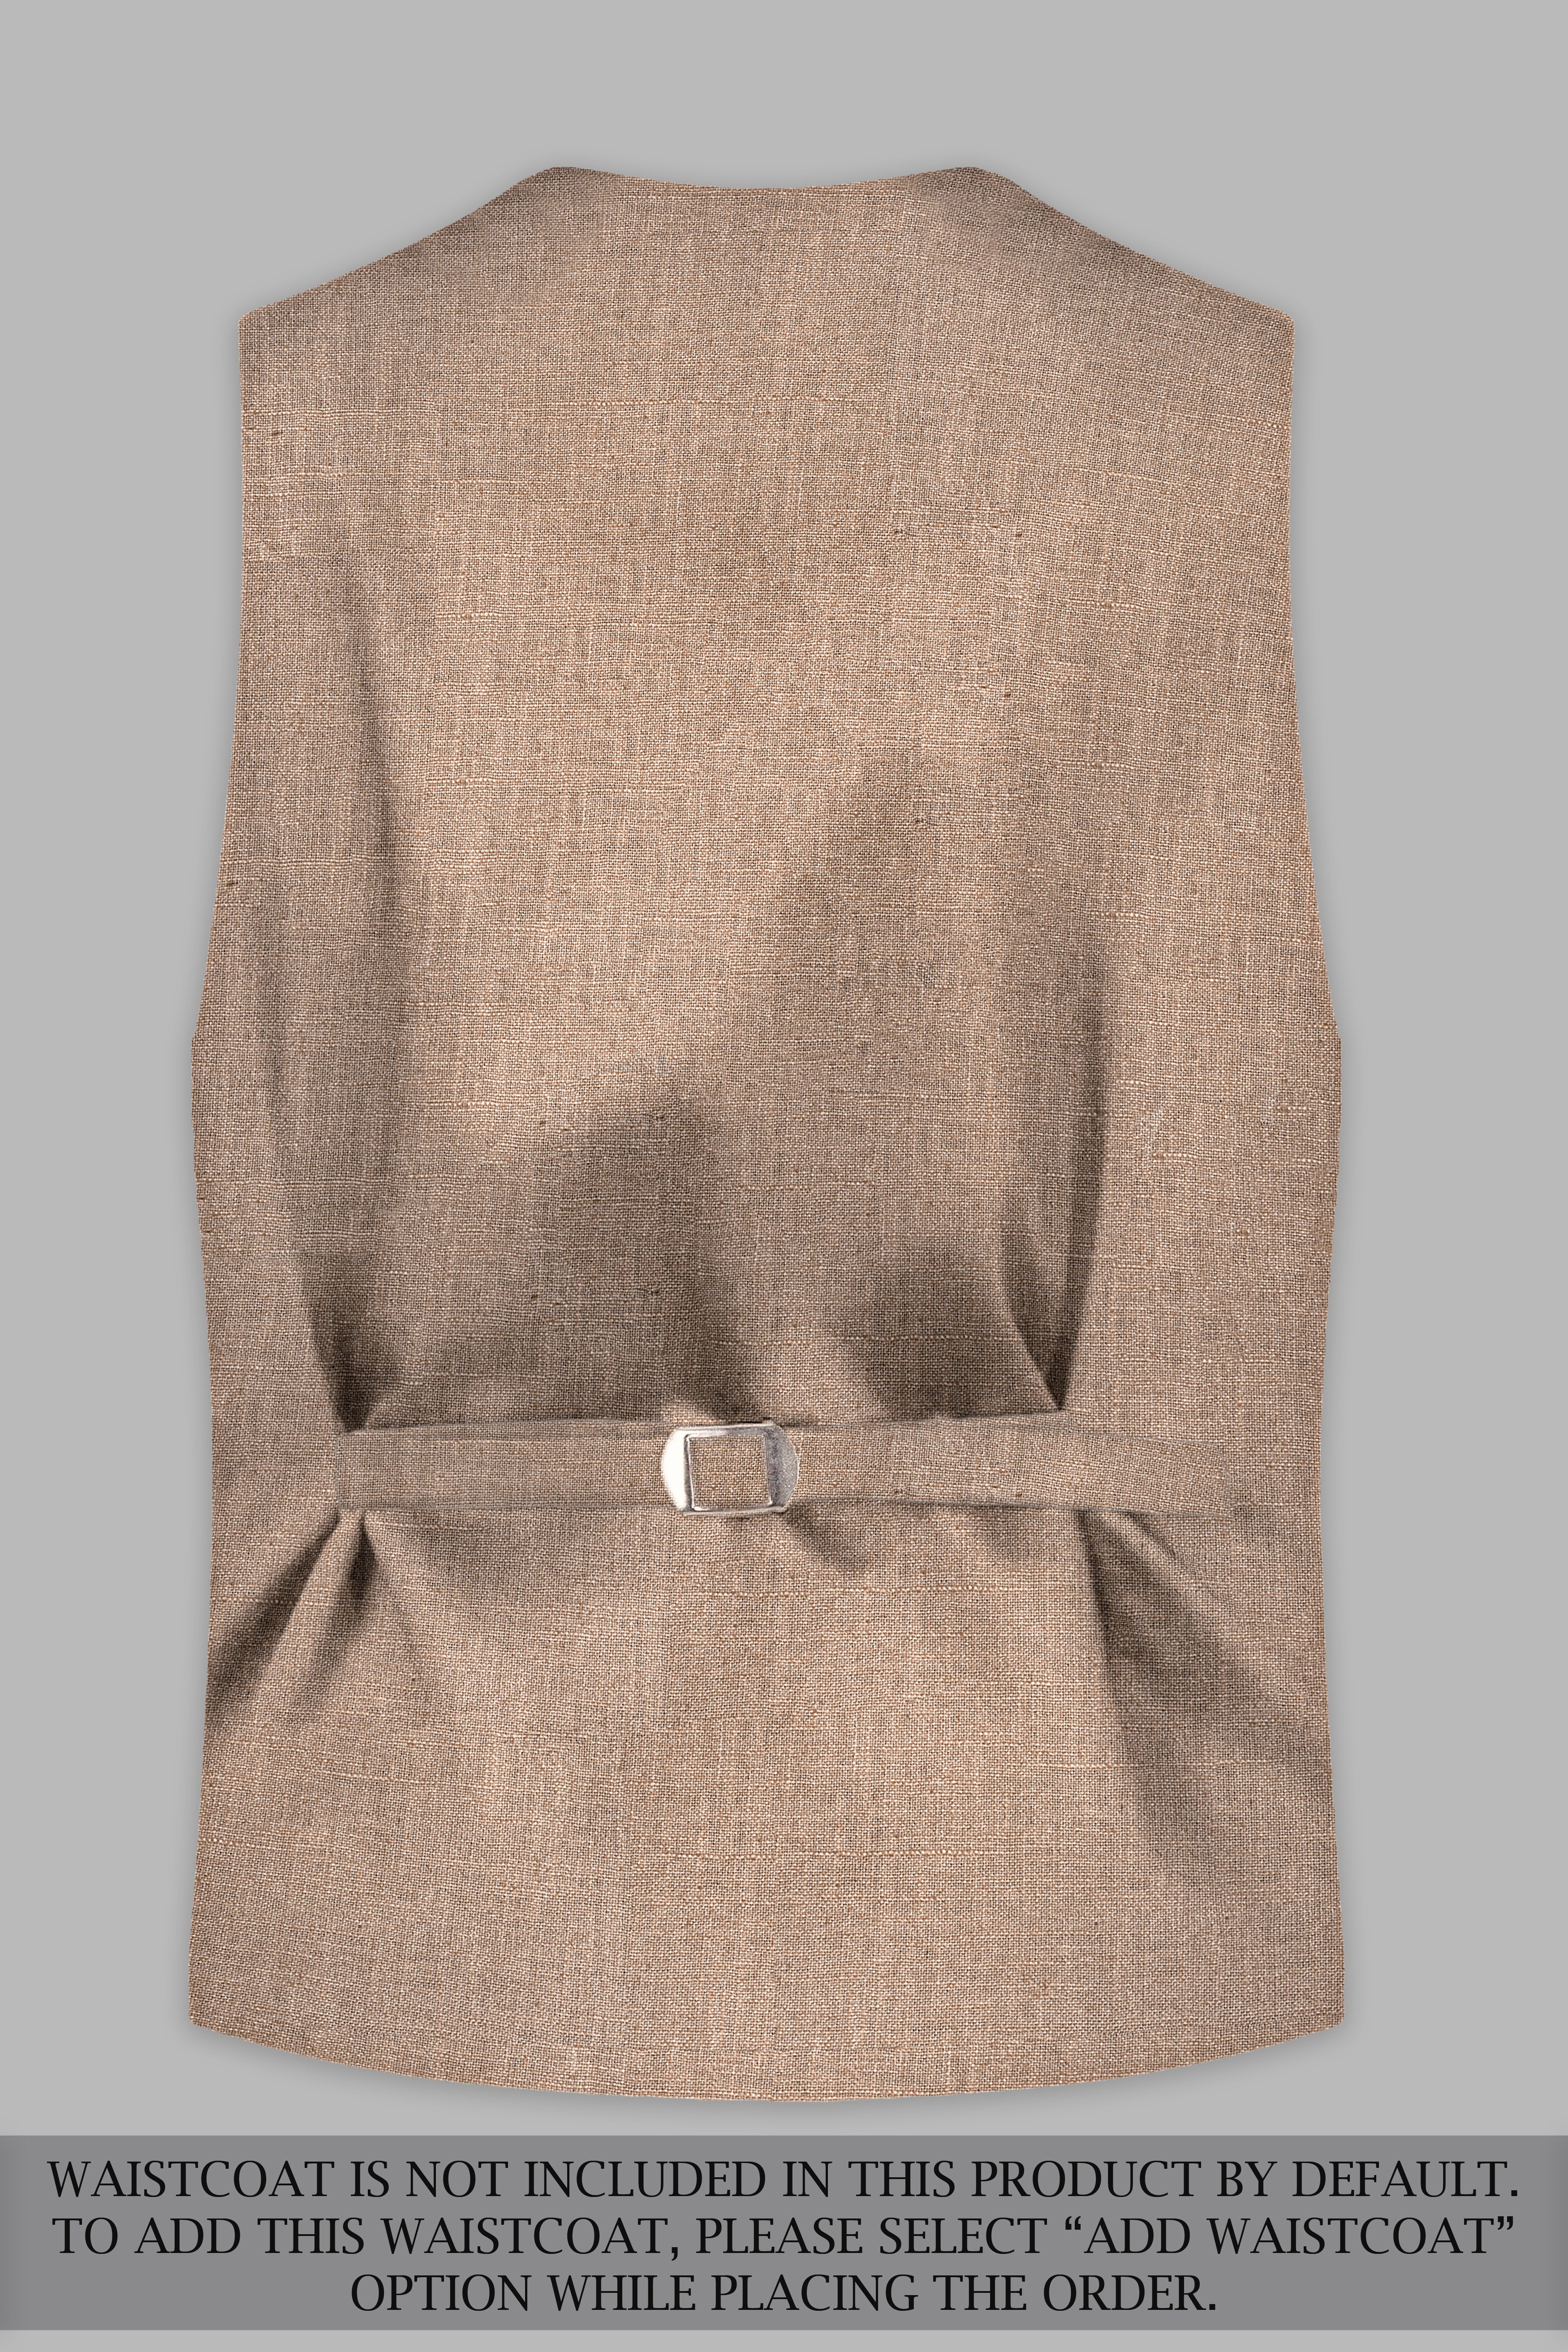 Beaver Brown Luxurious Linen Suit